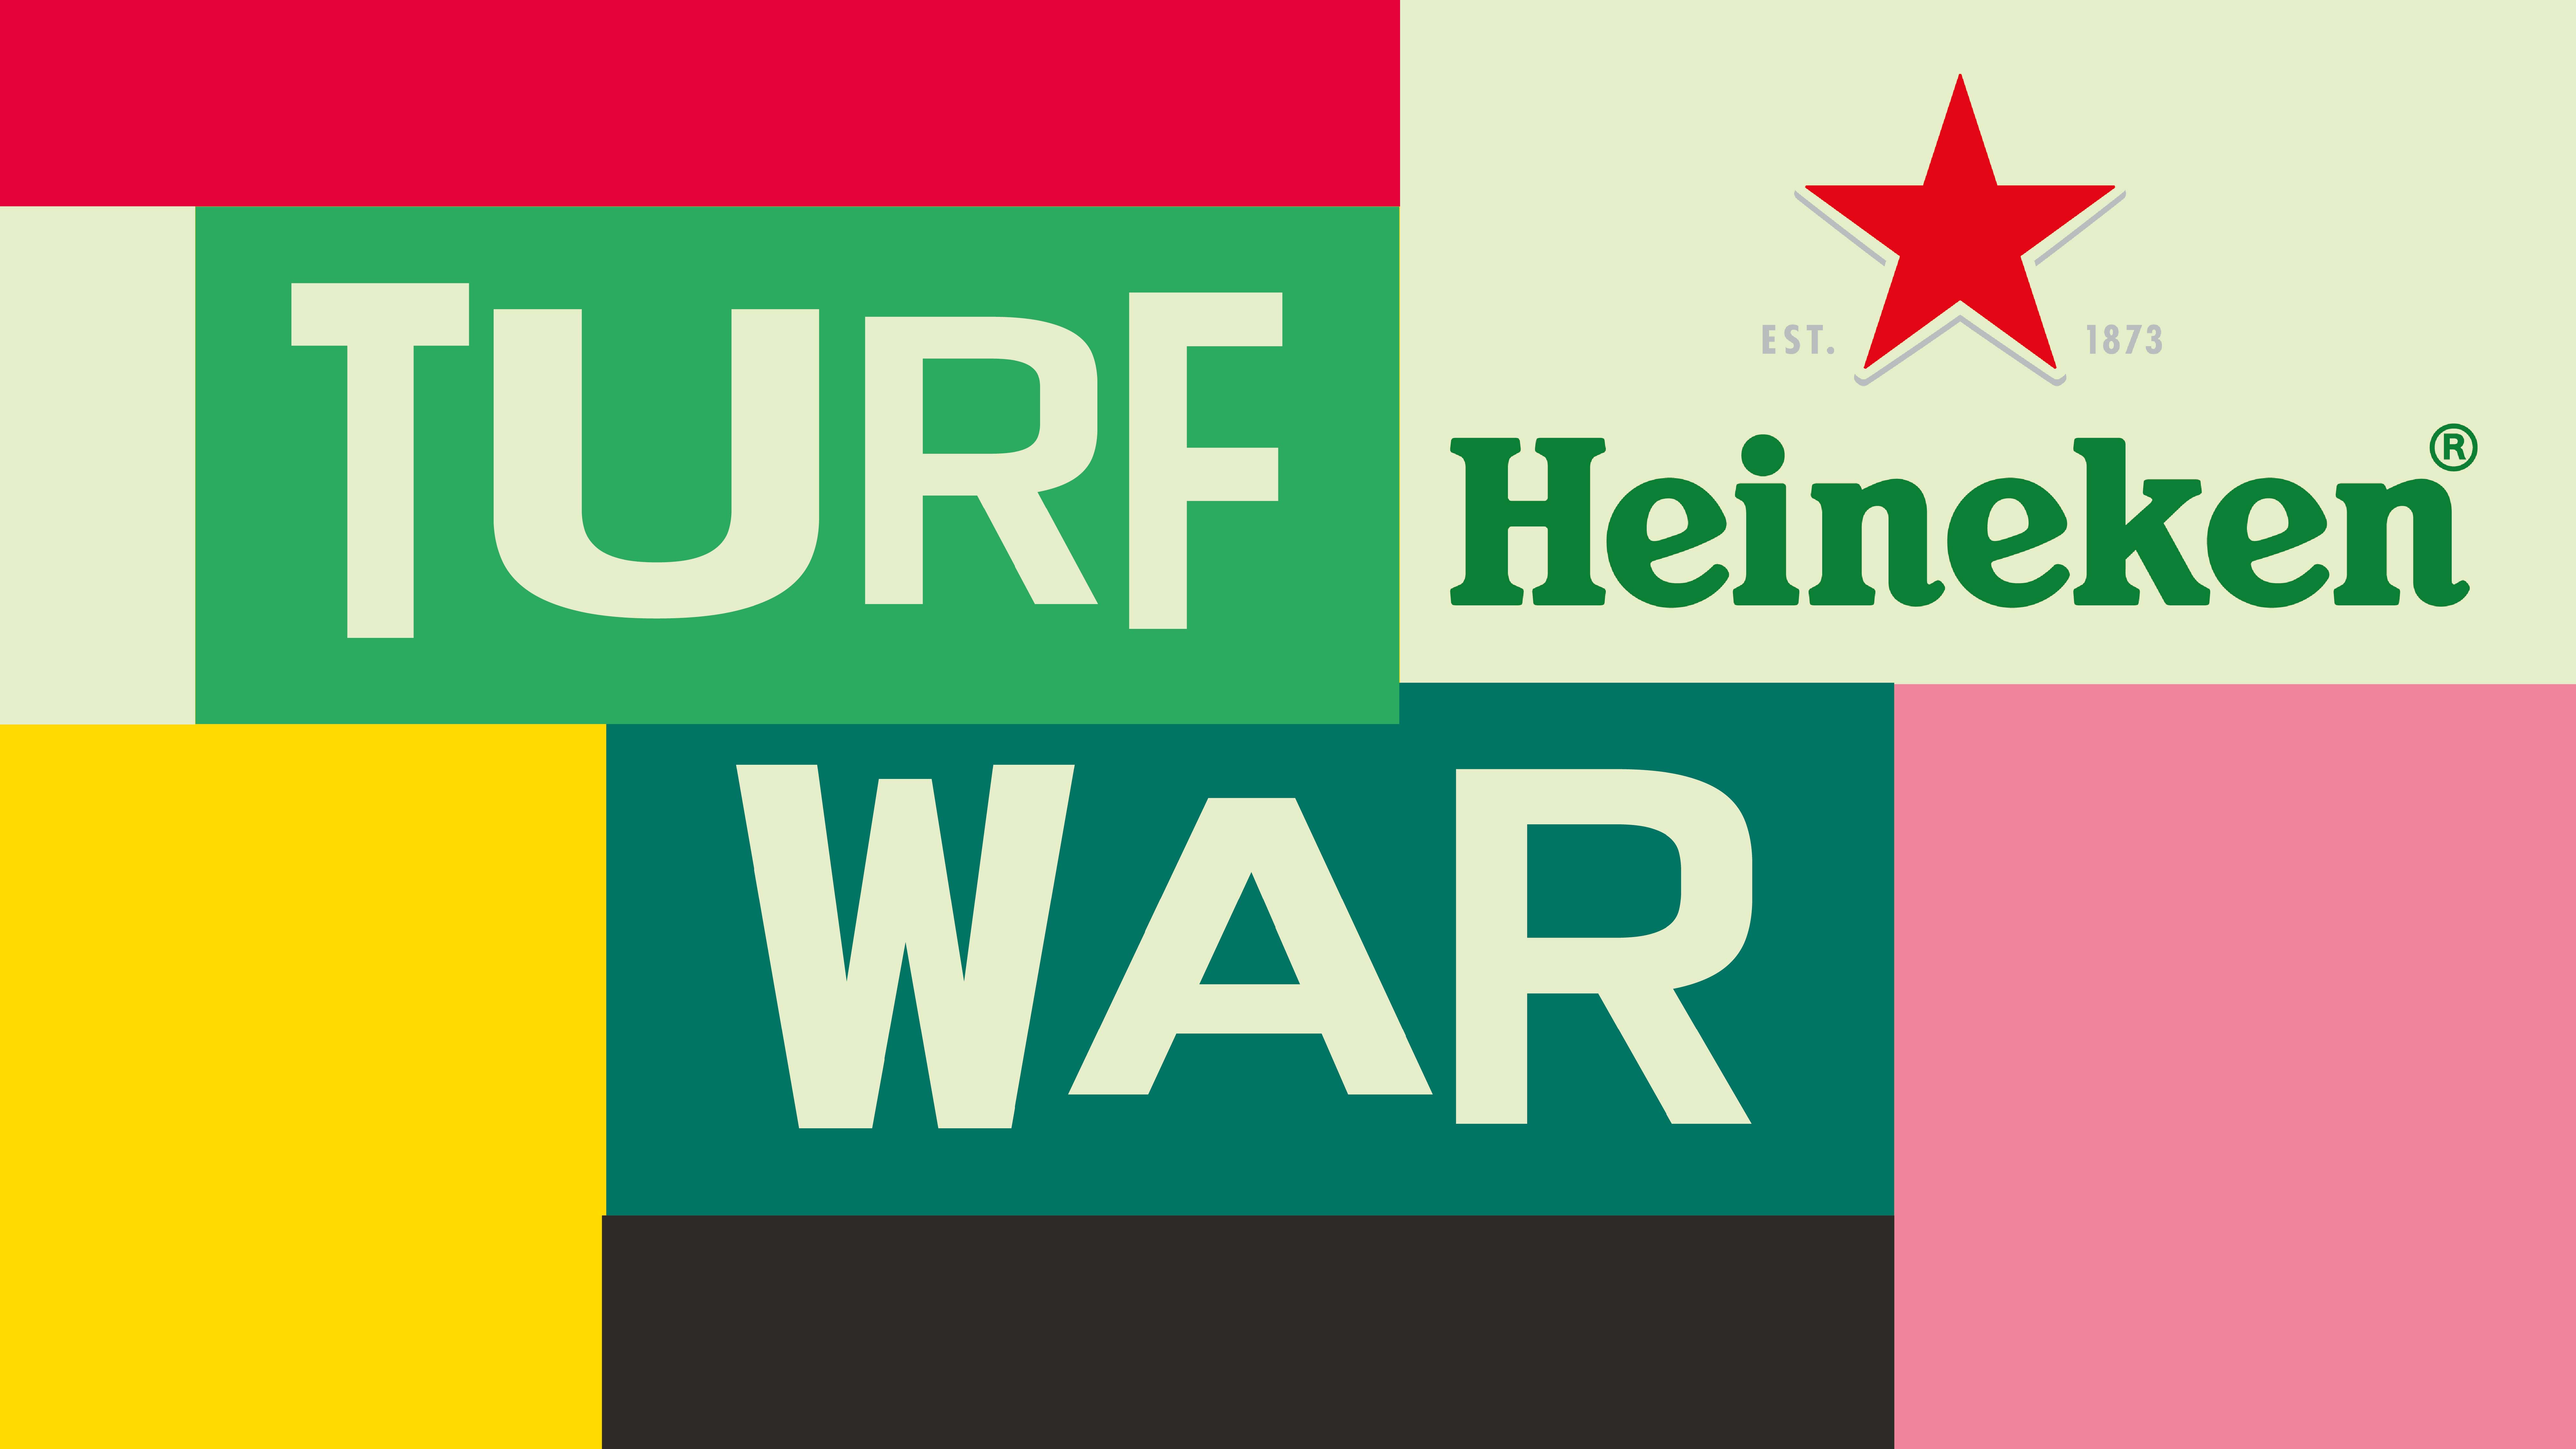 Advertising campaign for Heineken, Heineken logo and 'Turf War' text layered over colour block background.